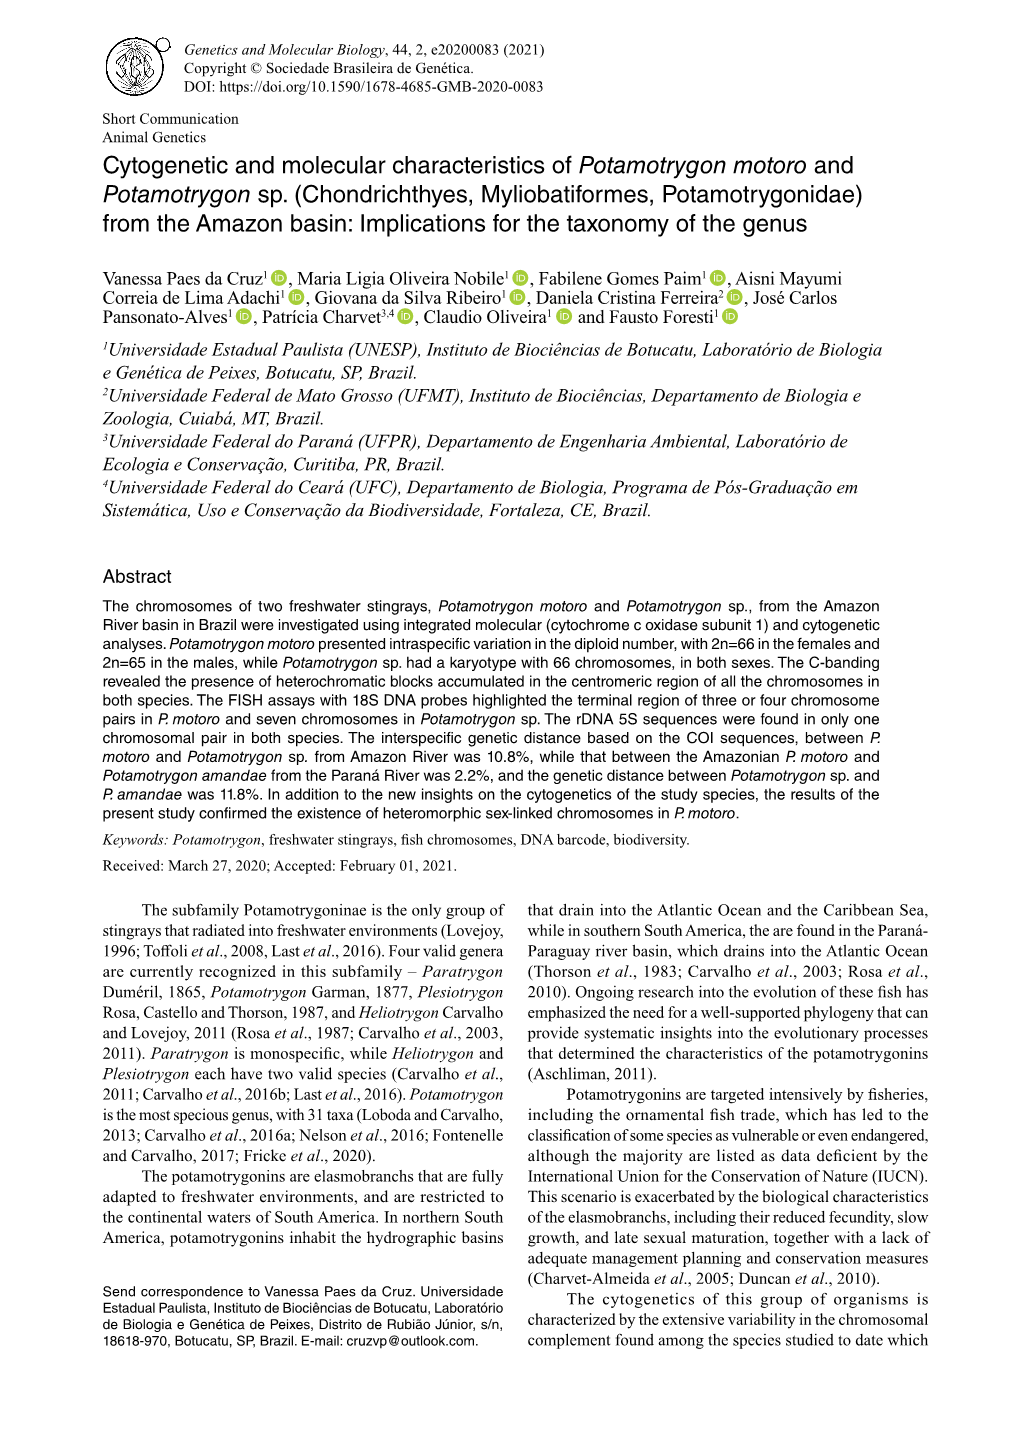 Cytogenetic and Molecular Characteristics of Potamotrygon Motoro and Potamotrygon Sp